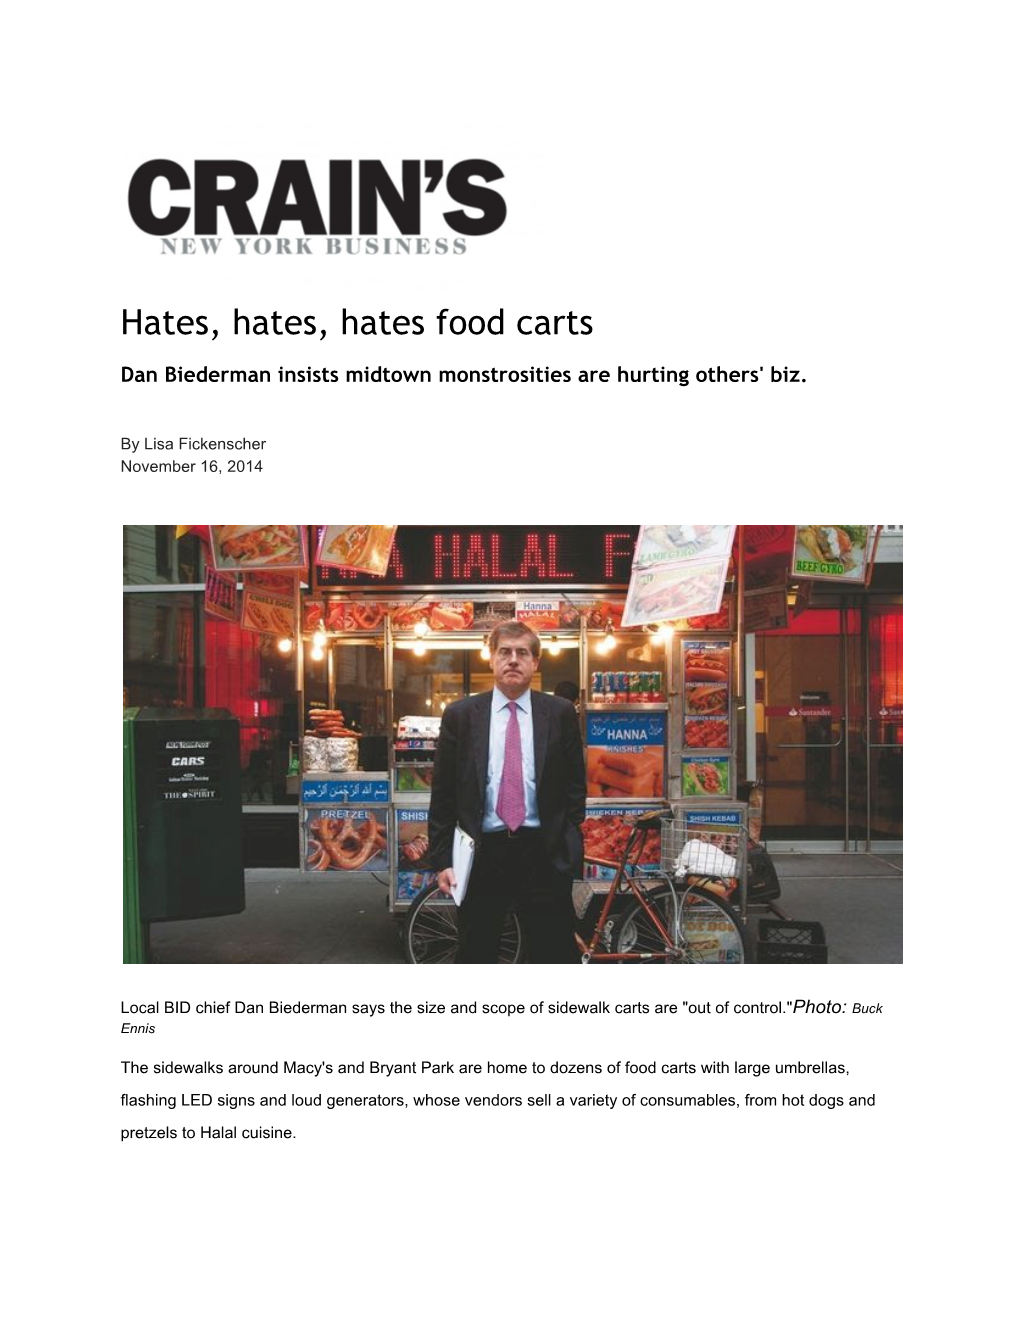 Hates, Hates, Hates Food Carts